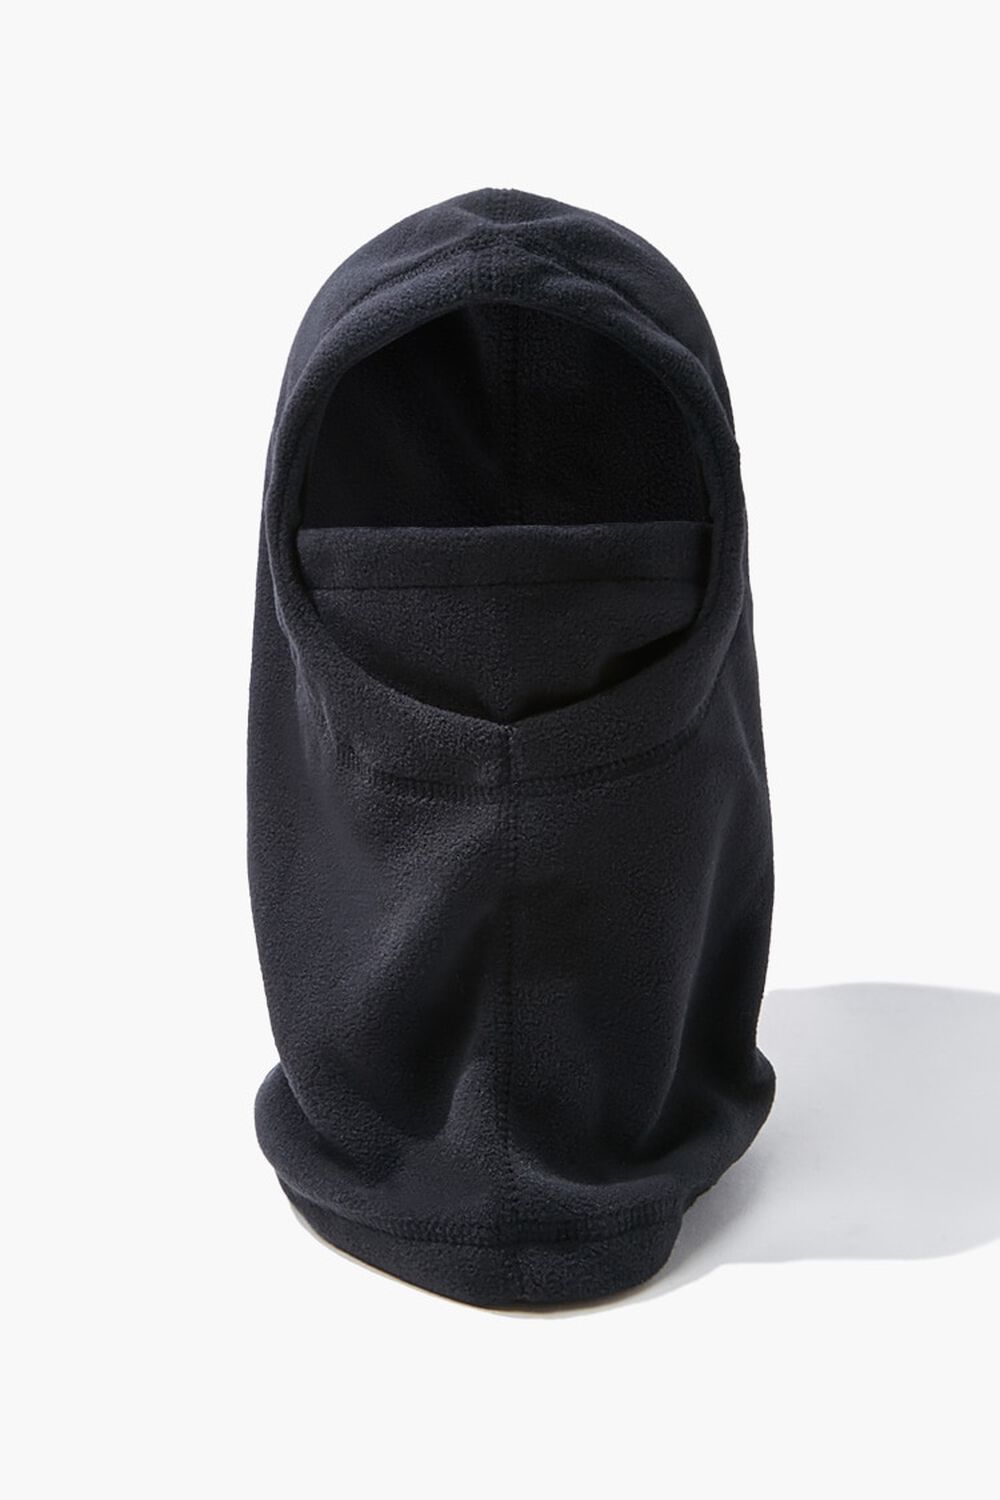 Hooded Face Mask, image 1